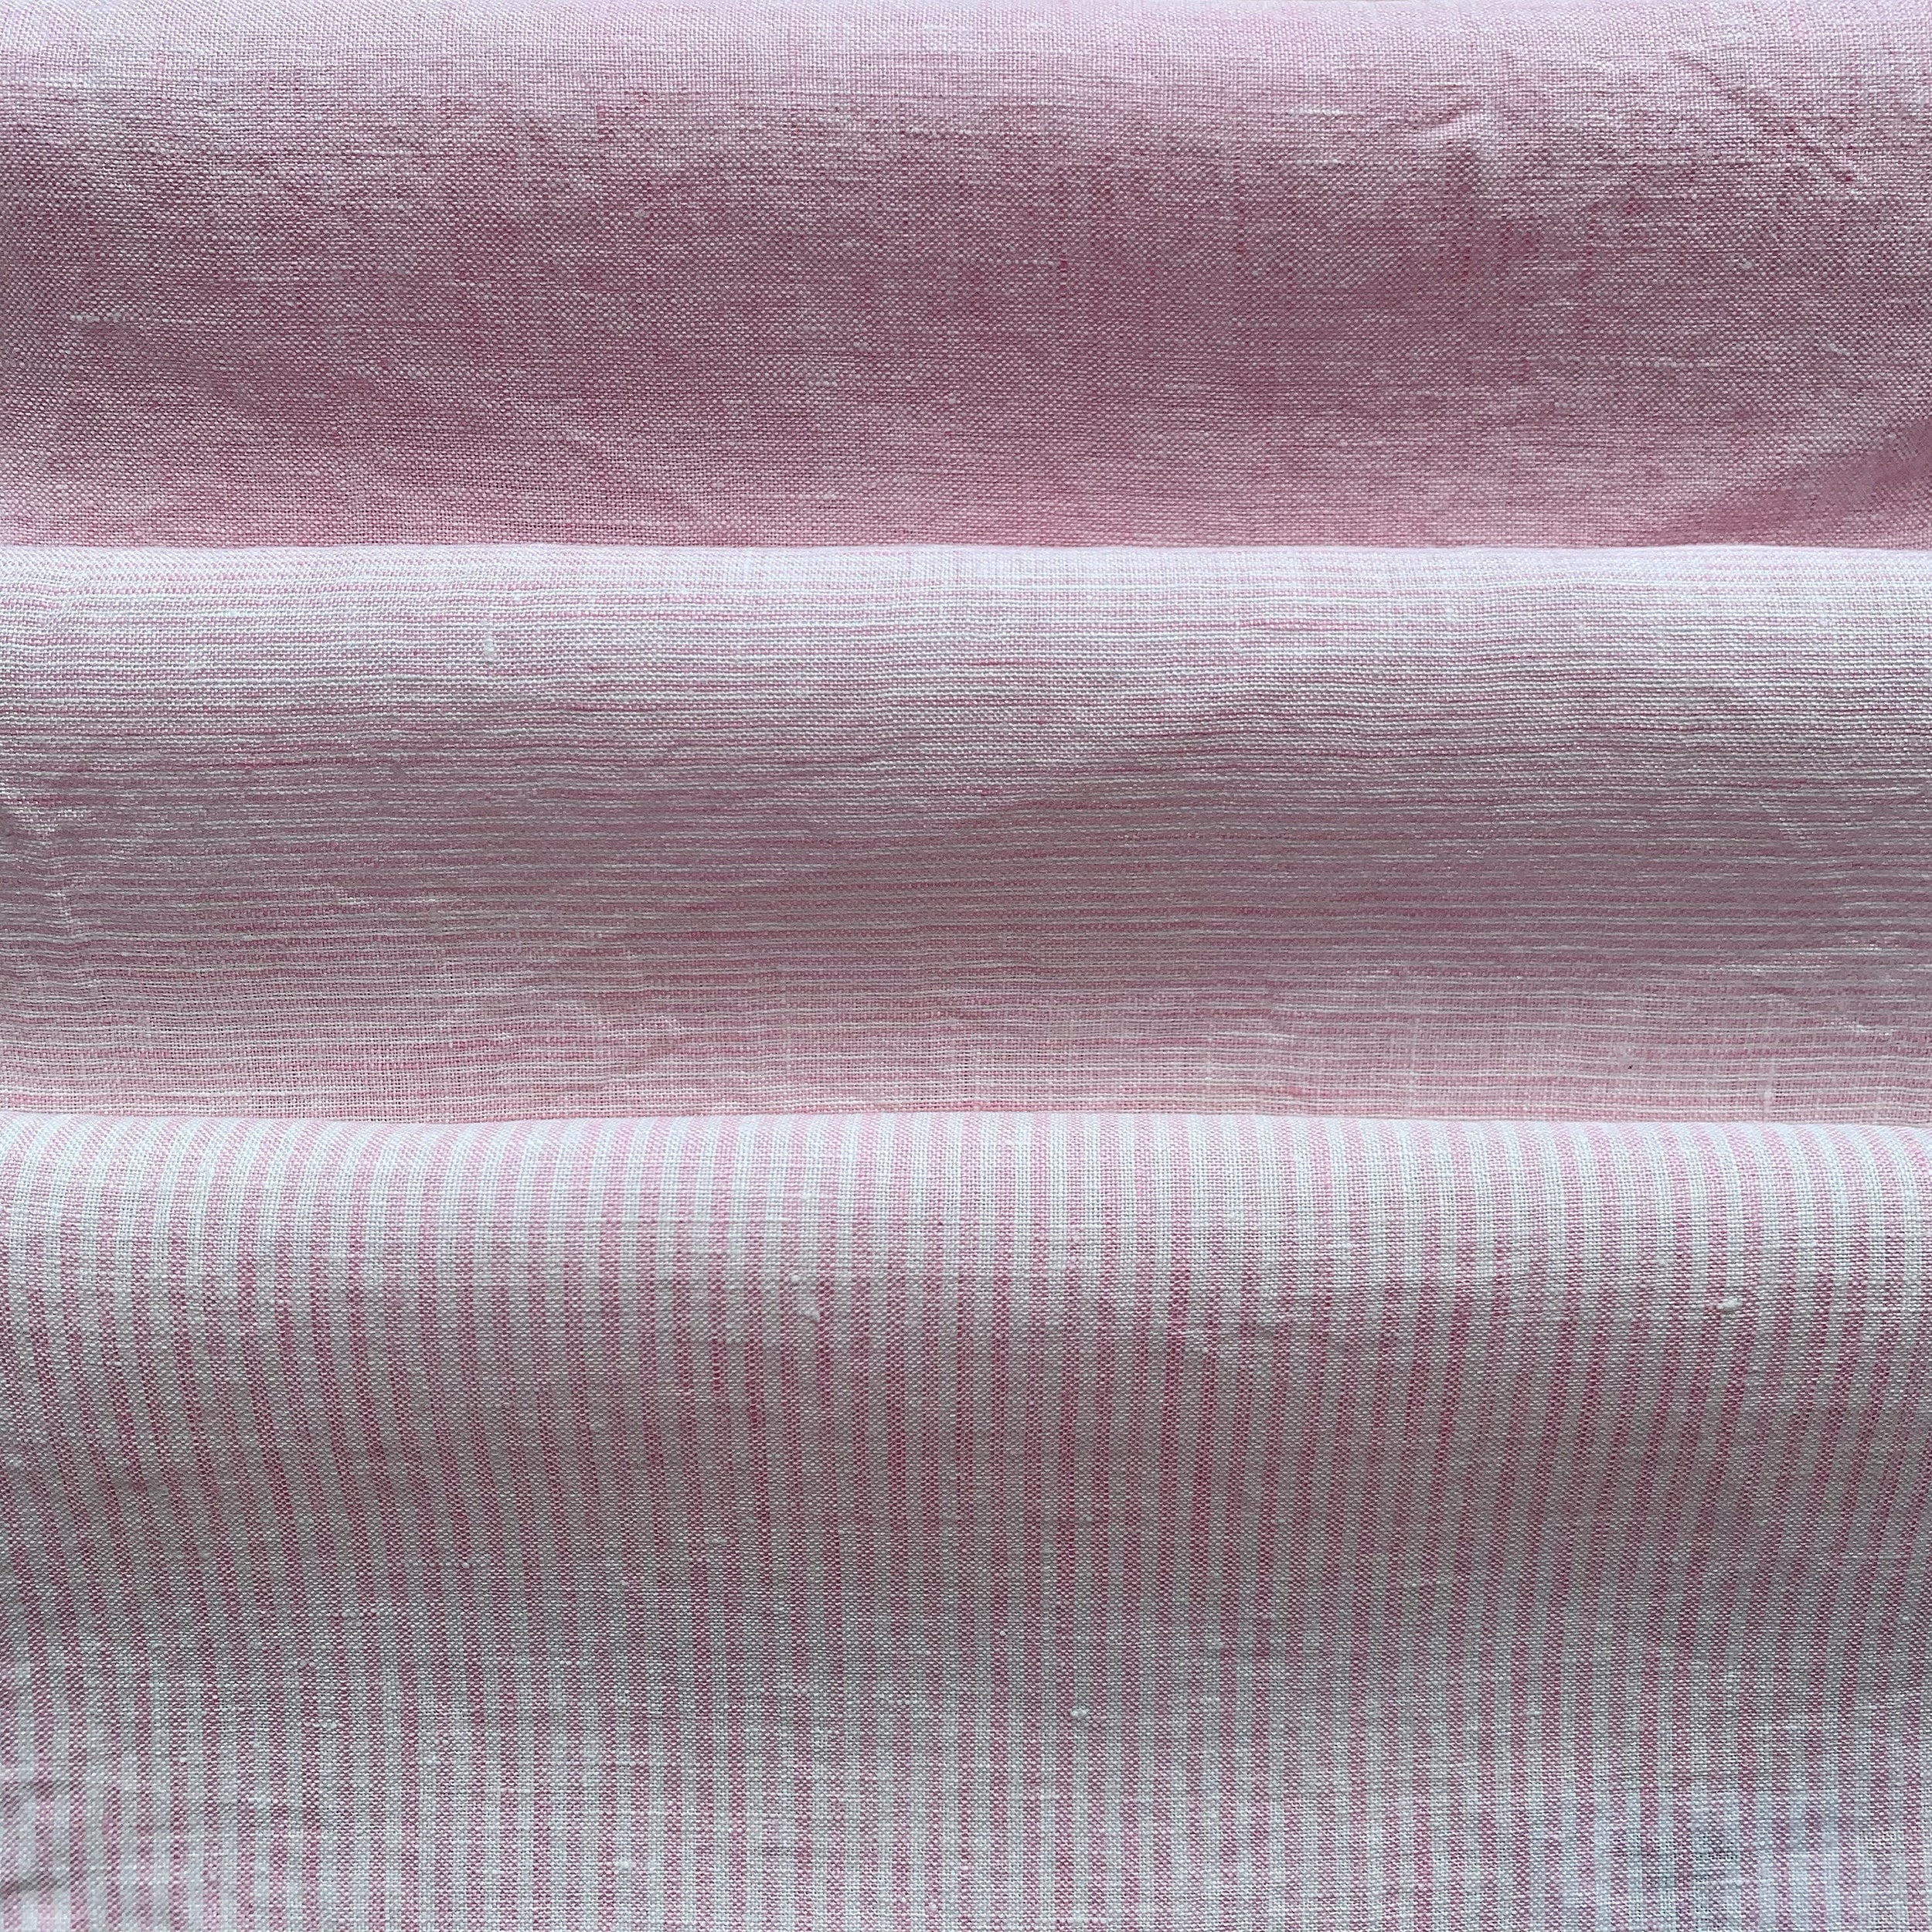 Tela de lino a rayas de gran peso por yarda o metro en Rosa. 260 gr / m2,  140 cm de ancho. Tejido de lino para almohadas decorativas. -  México